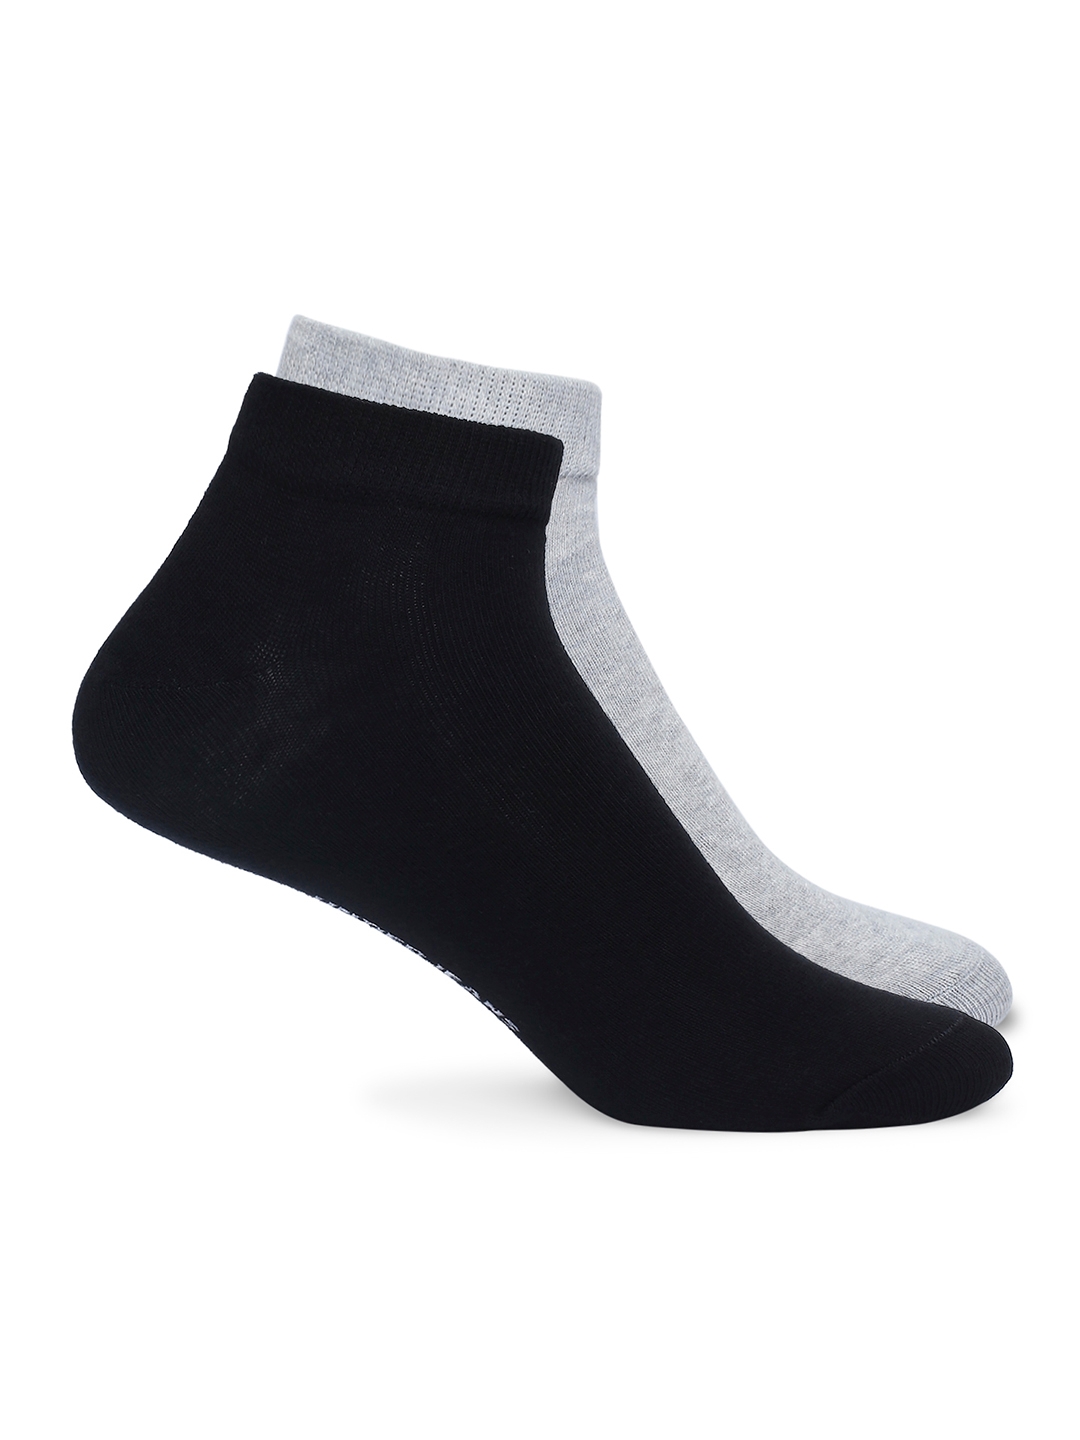 Underjeans By Spykar Men Grey Melange & Black Cotton Blend Sneaker Socks - Pack Of 2